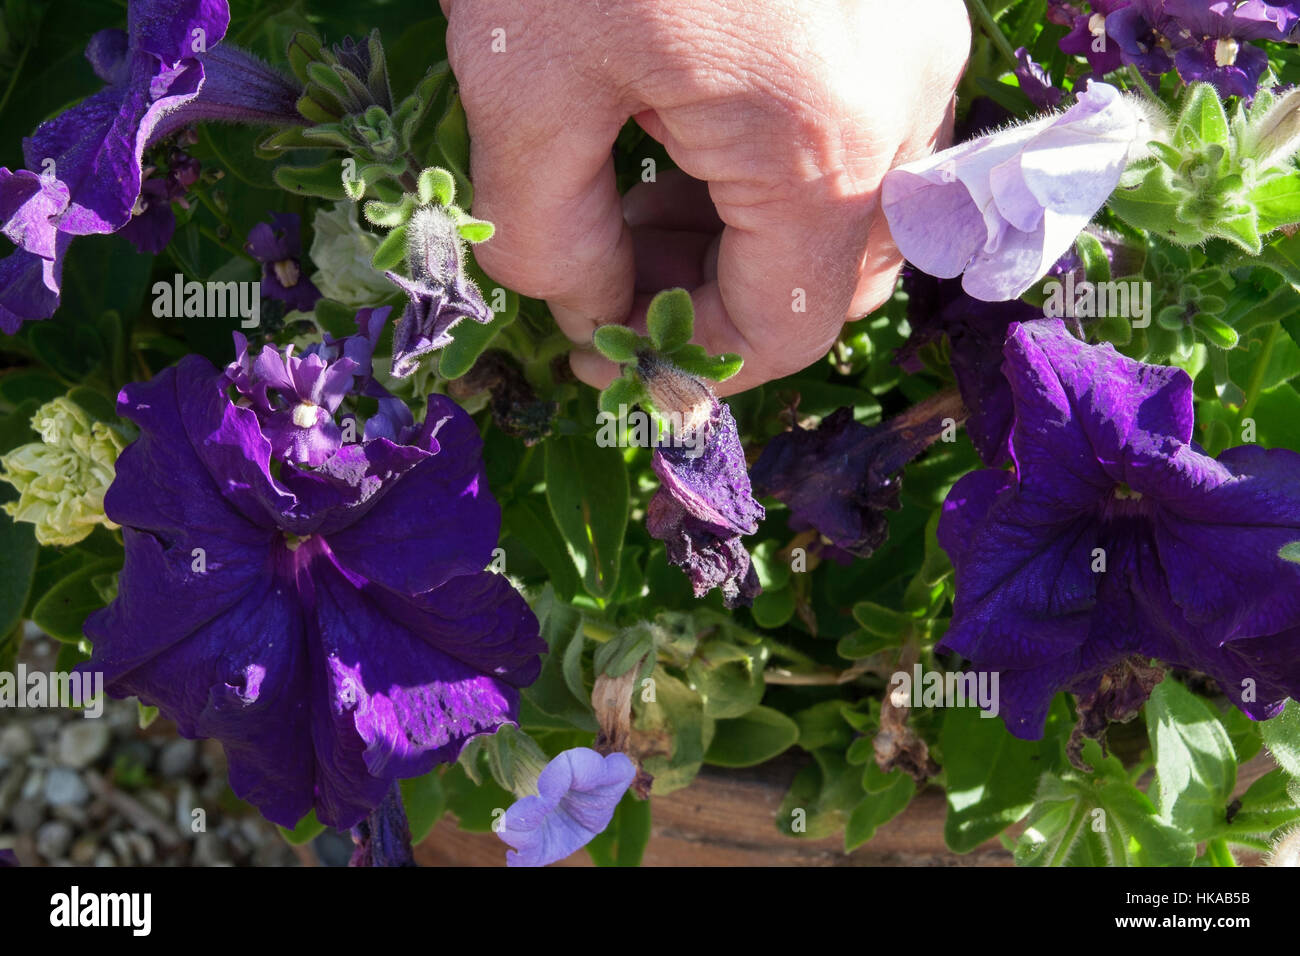 Deadheading a petunia plant Stock Photo